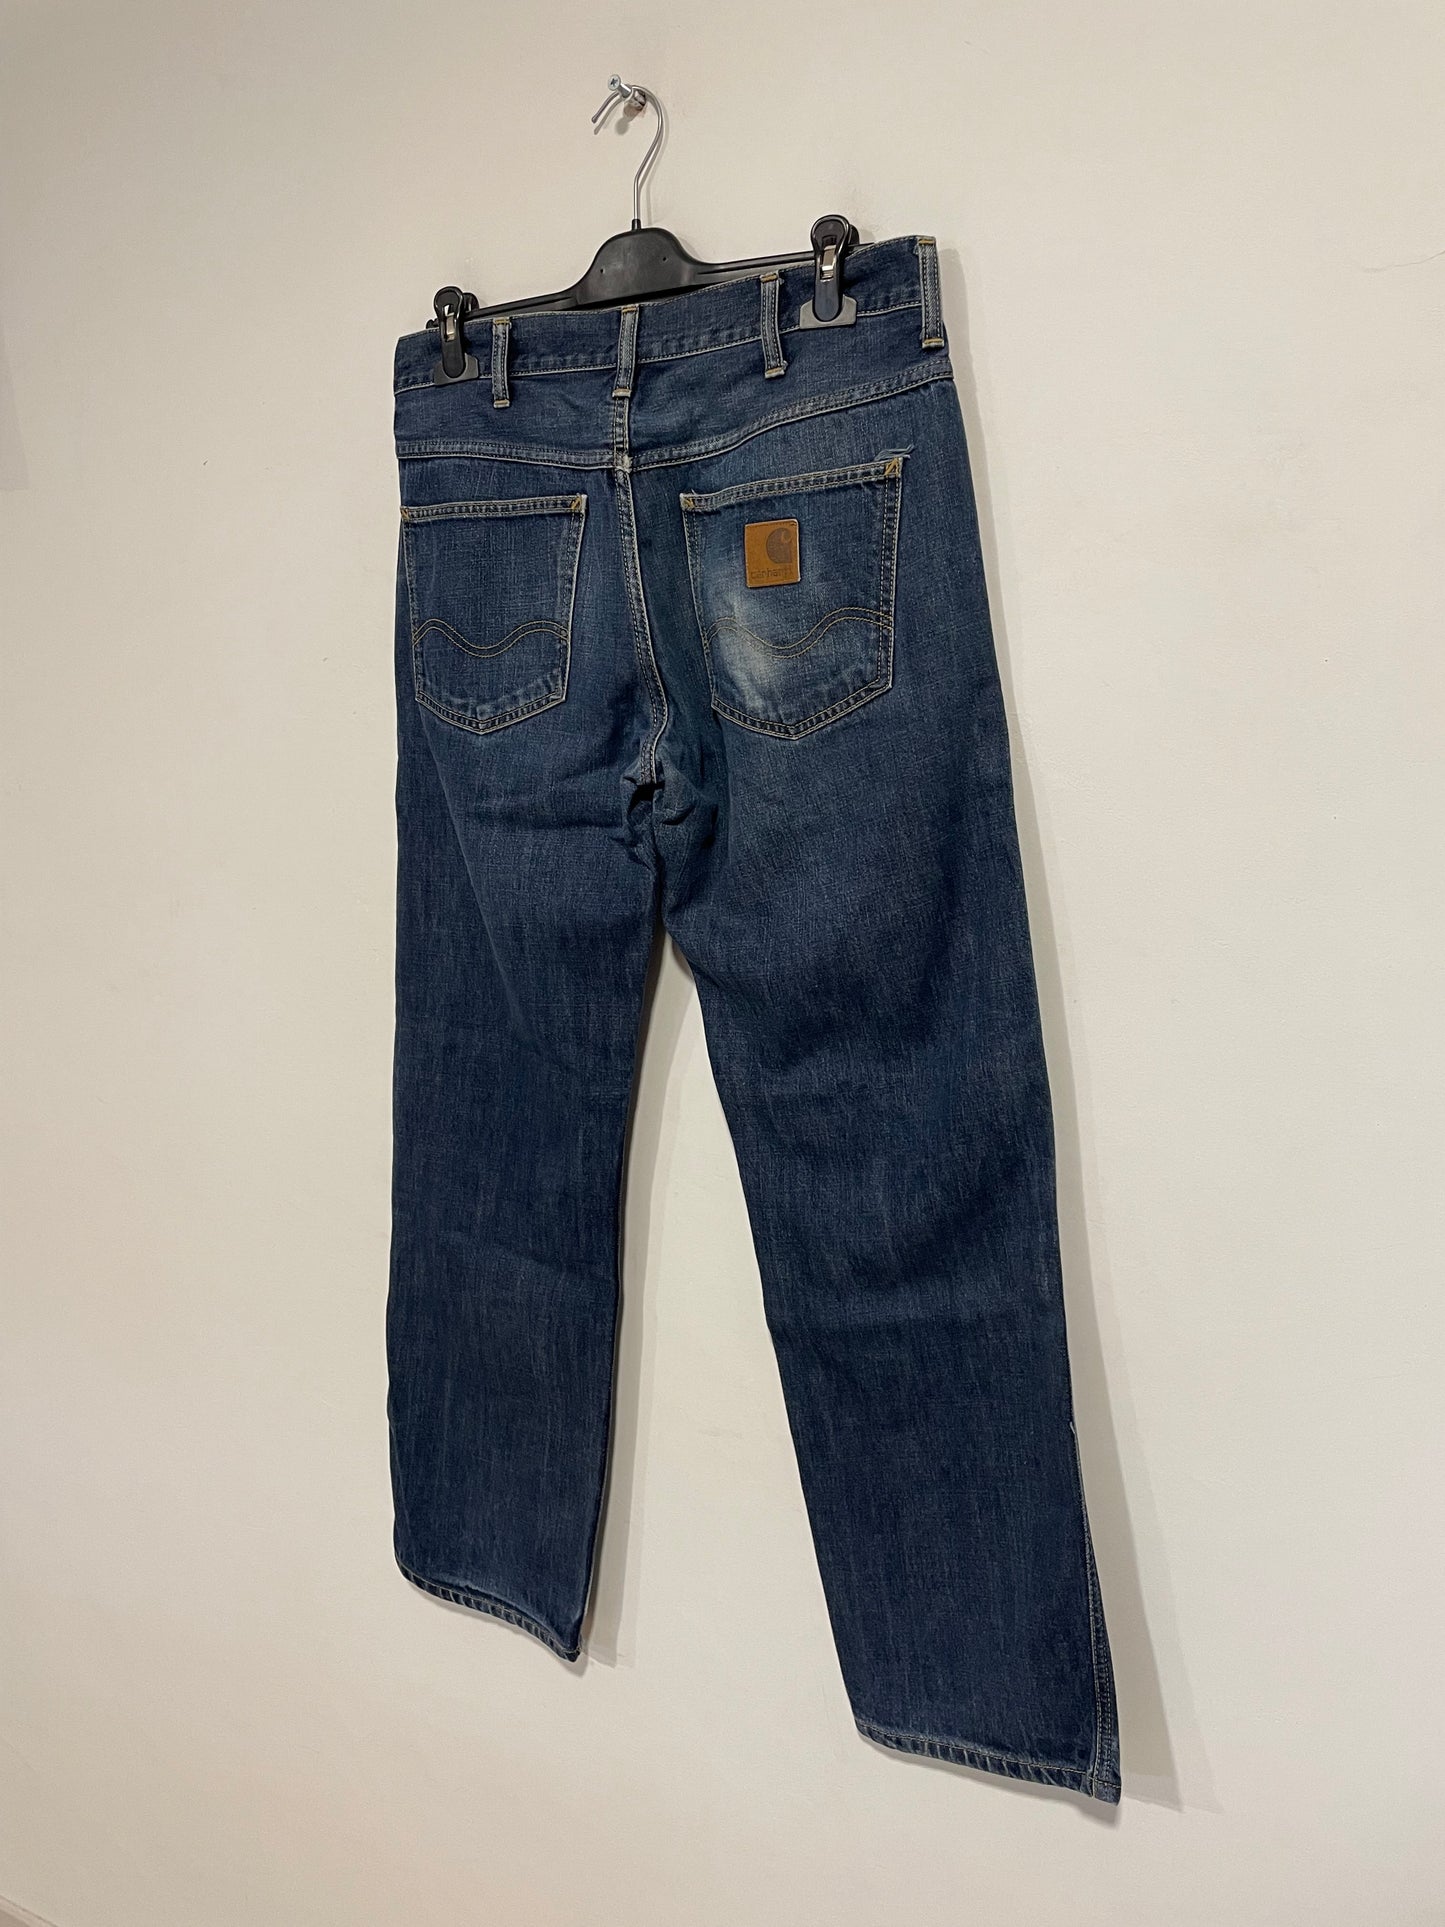 Jeans Carhartt Western pant (C933)